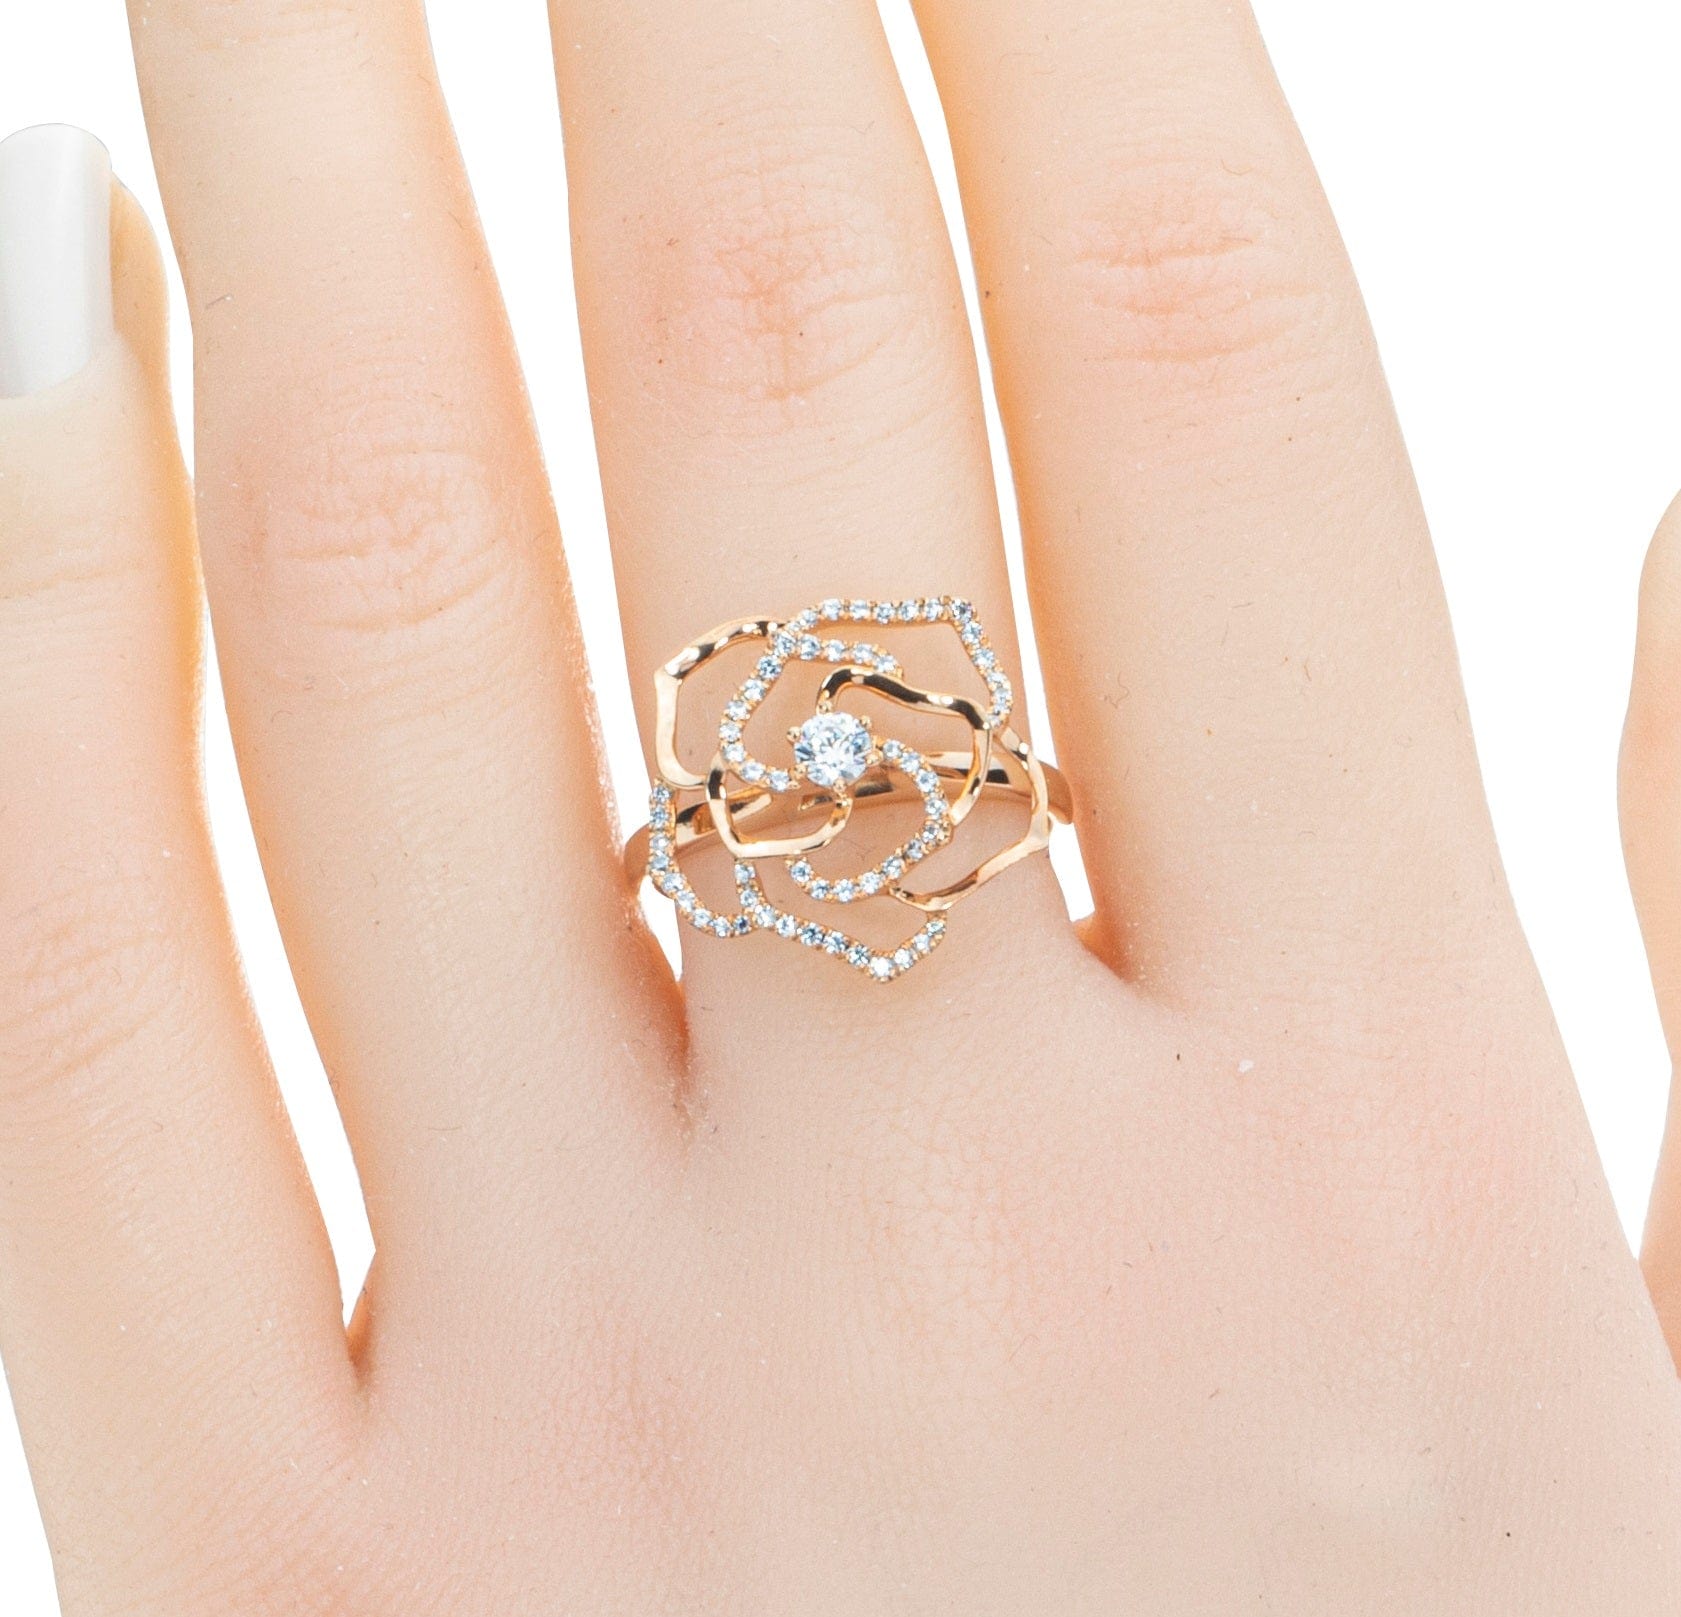 Hyperbole 18K White Gold Diamond Floral Ring For Lady